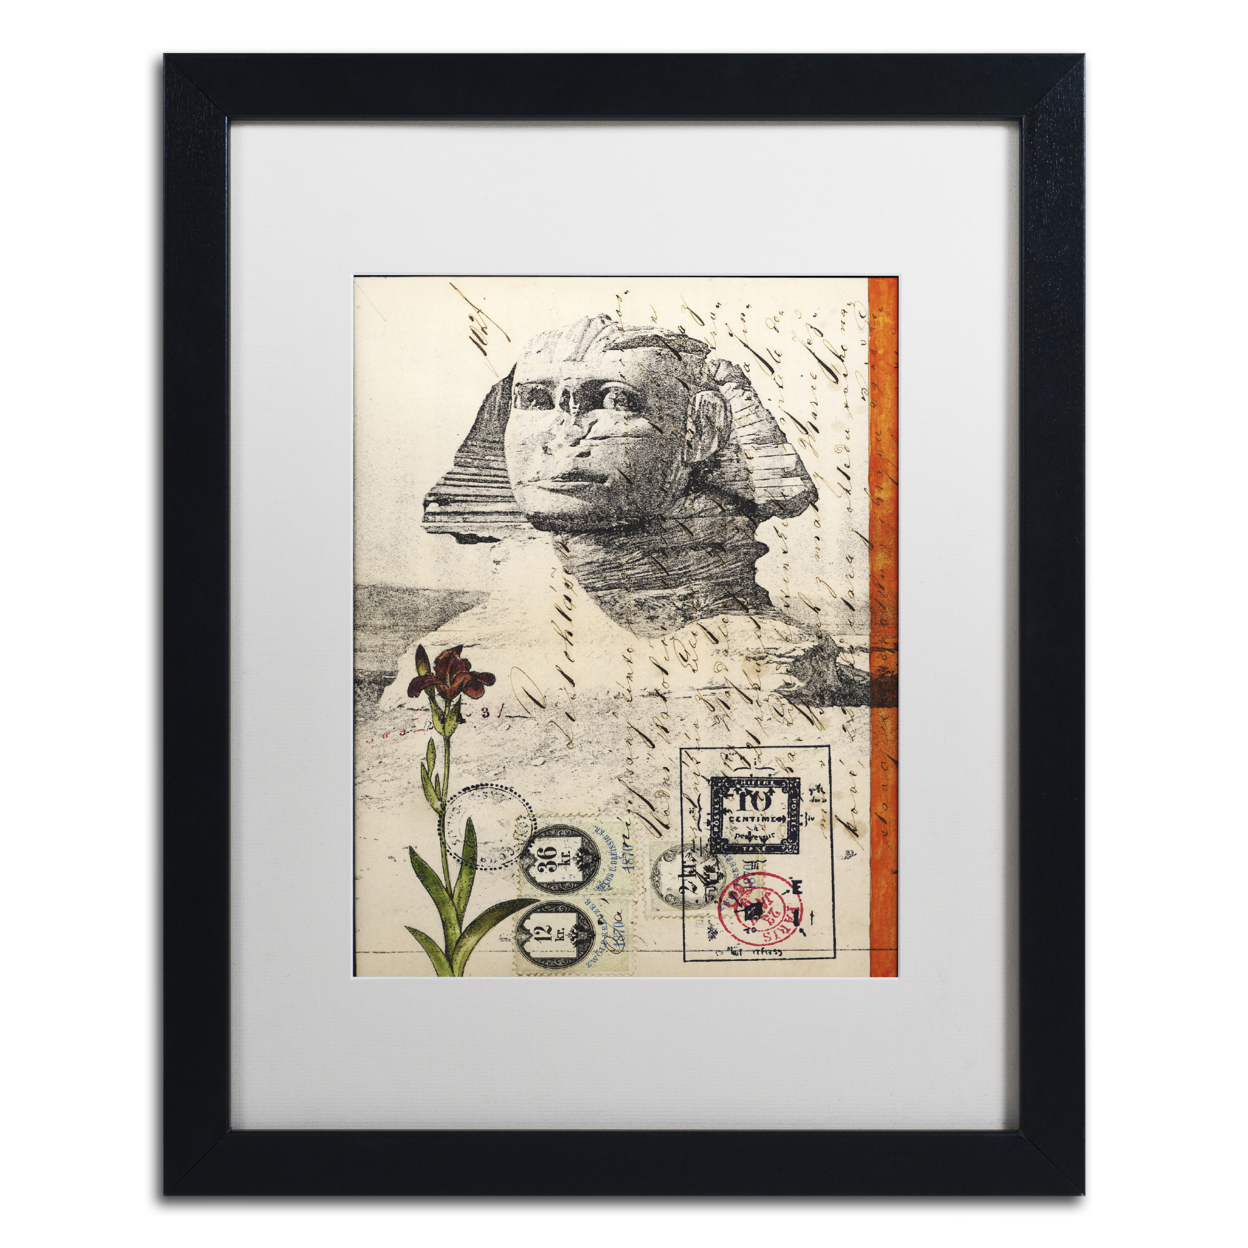 Nick Bantock 'Sphinx' Black Wooden Framed Art 18 X 22 Inches